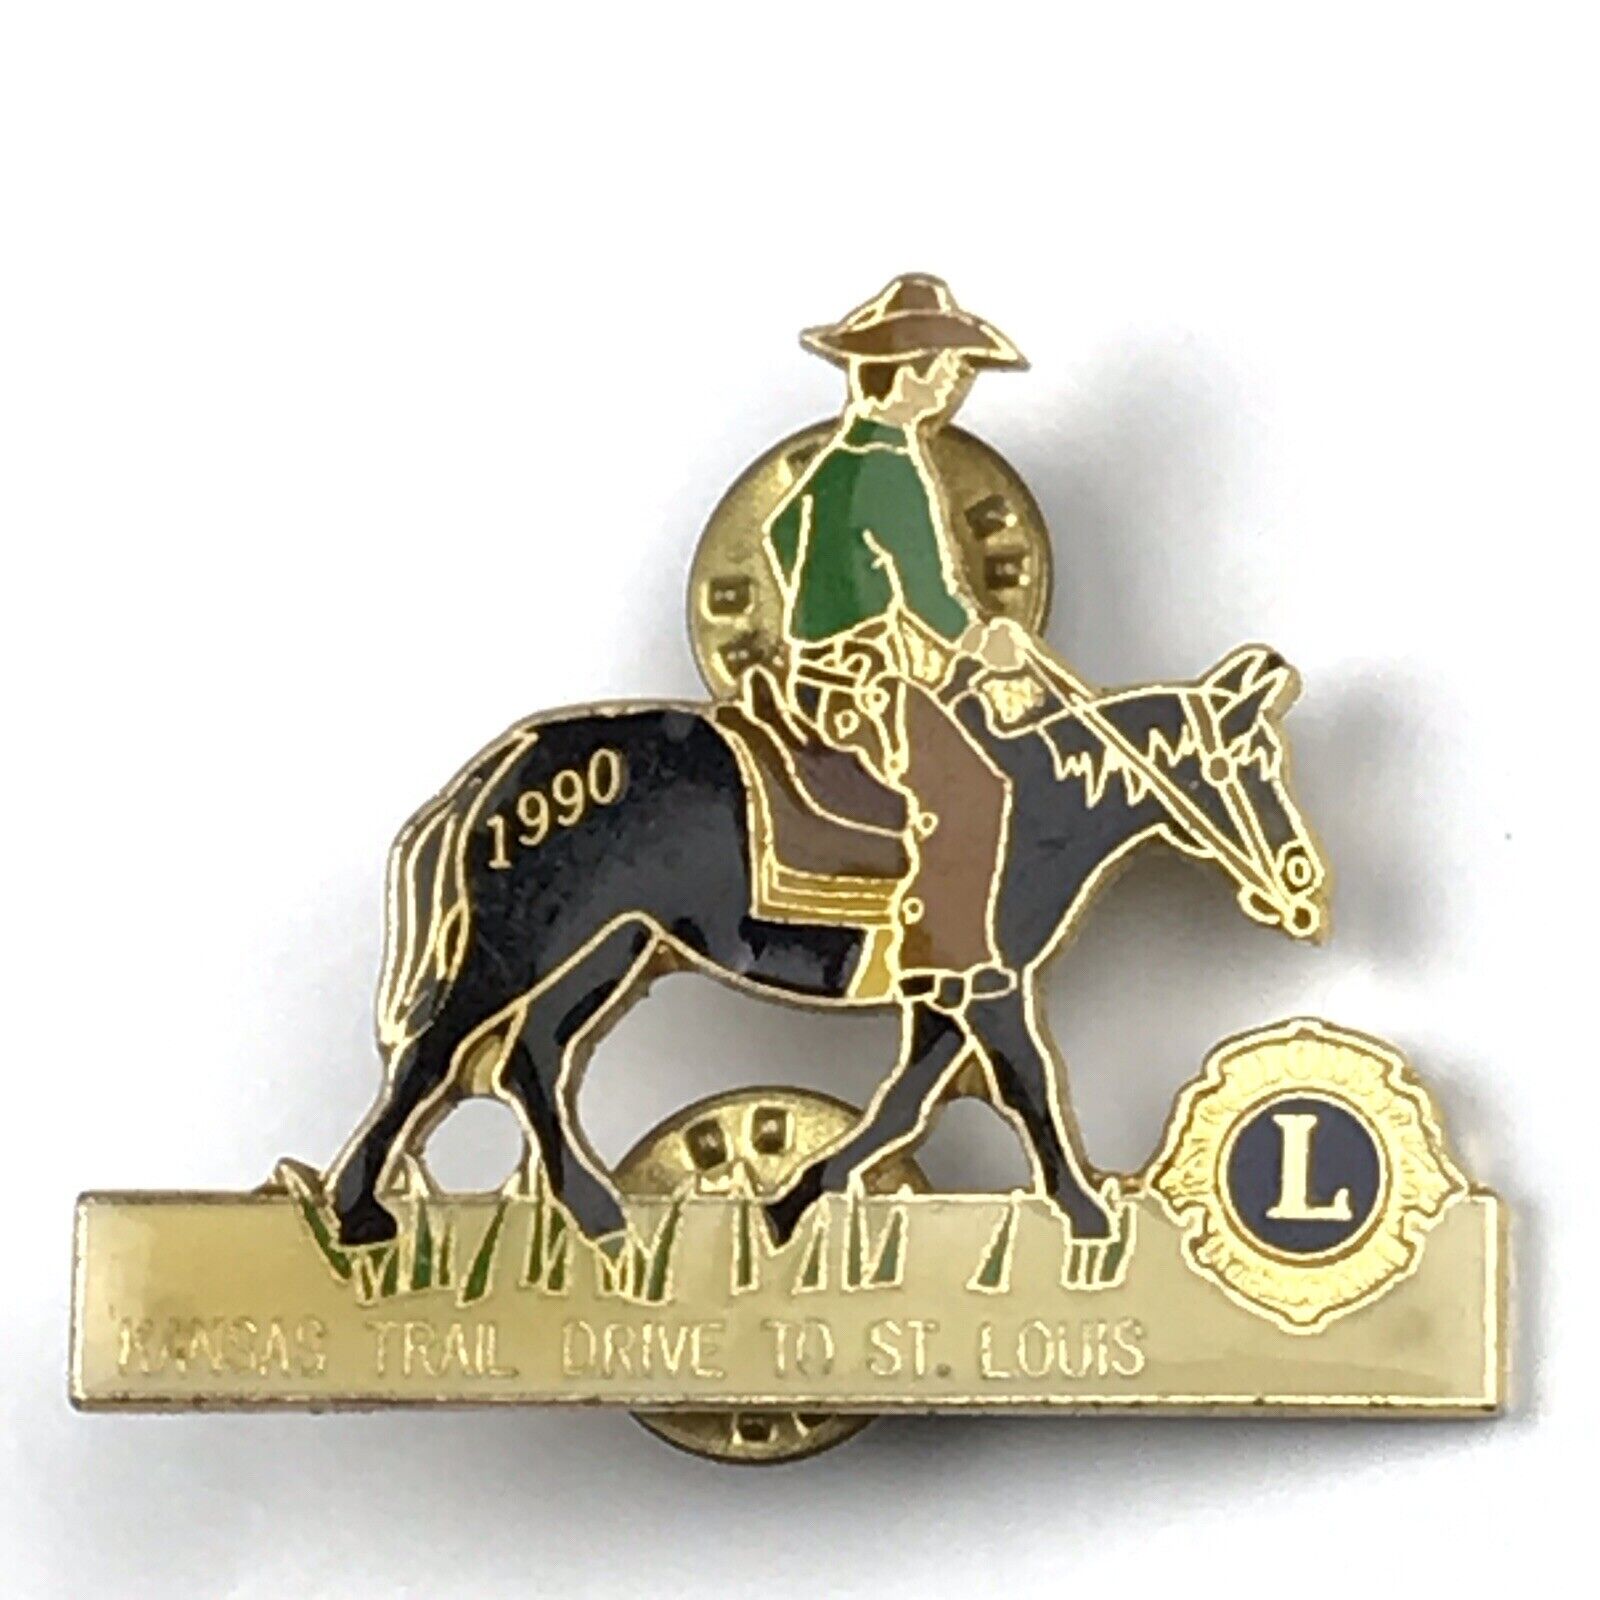 Lions Club Kansas Trail Drive To St. Louis 1990 Horse rider Pin Vintage